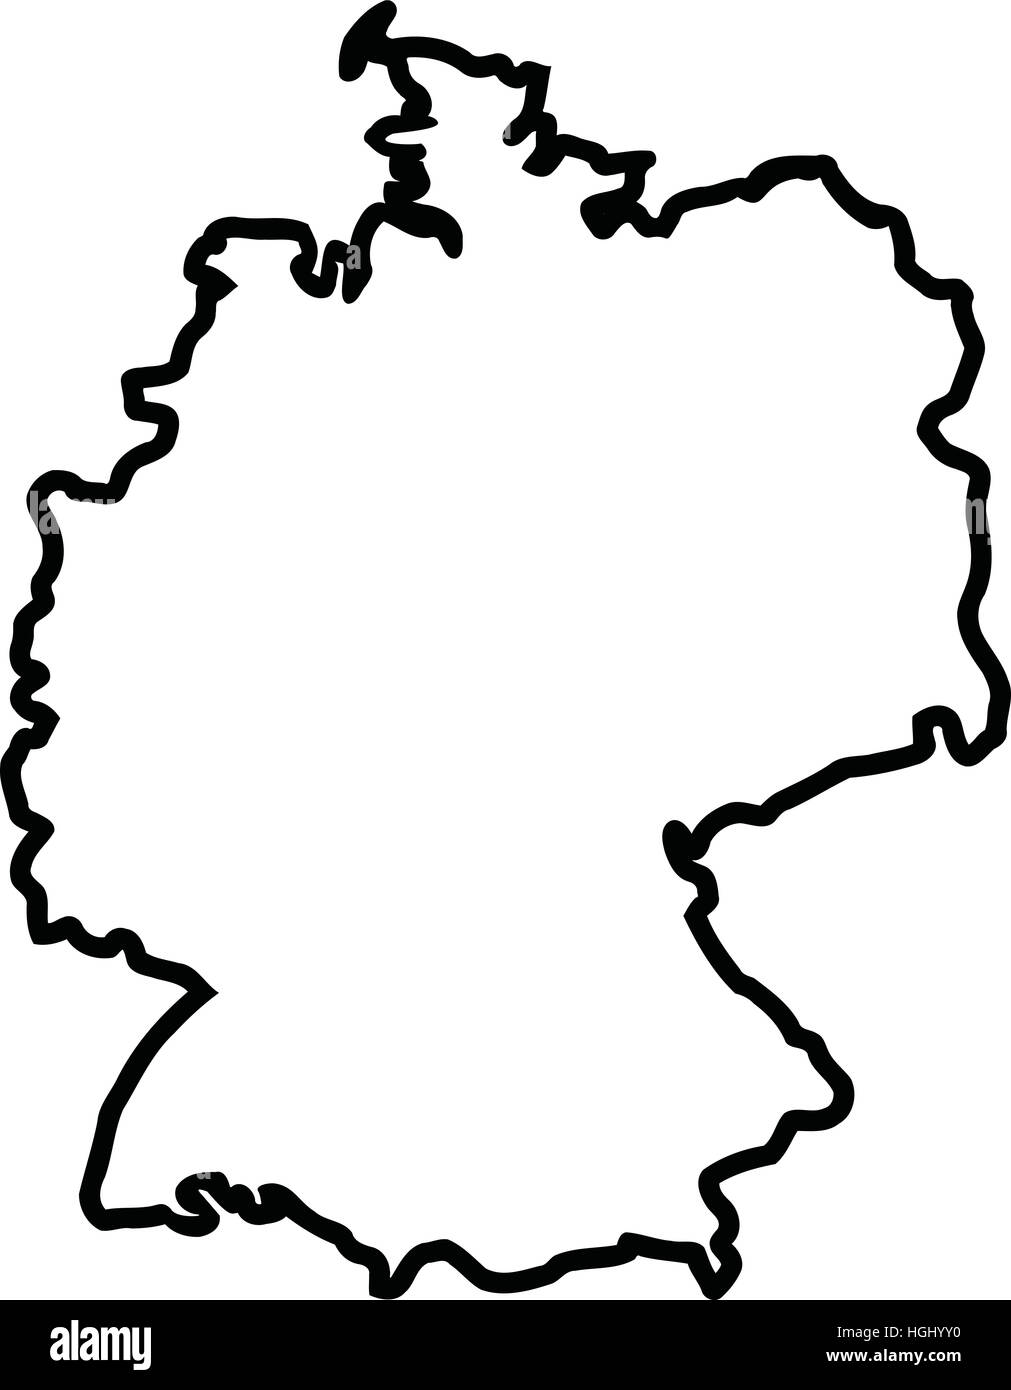 Germany map contour Stock Photo